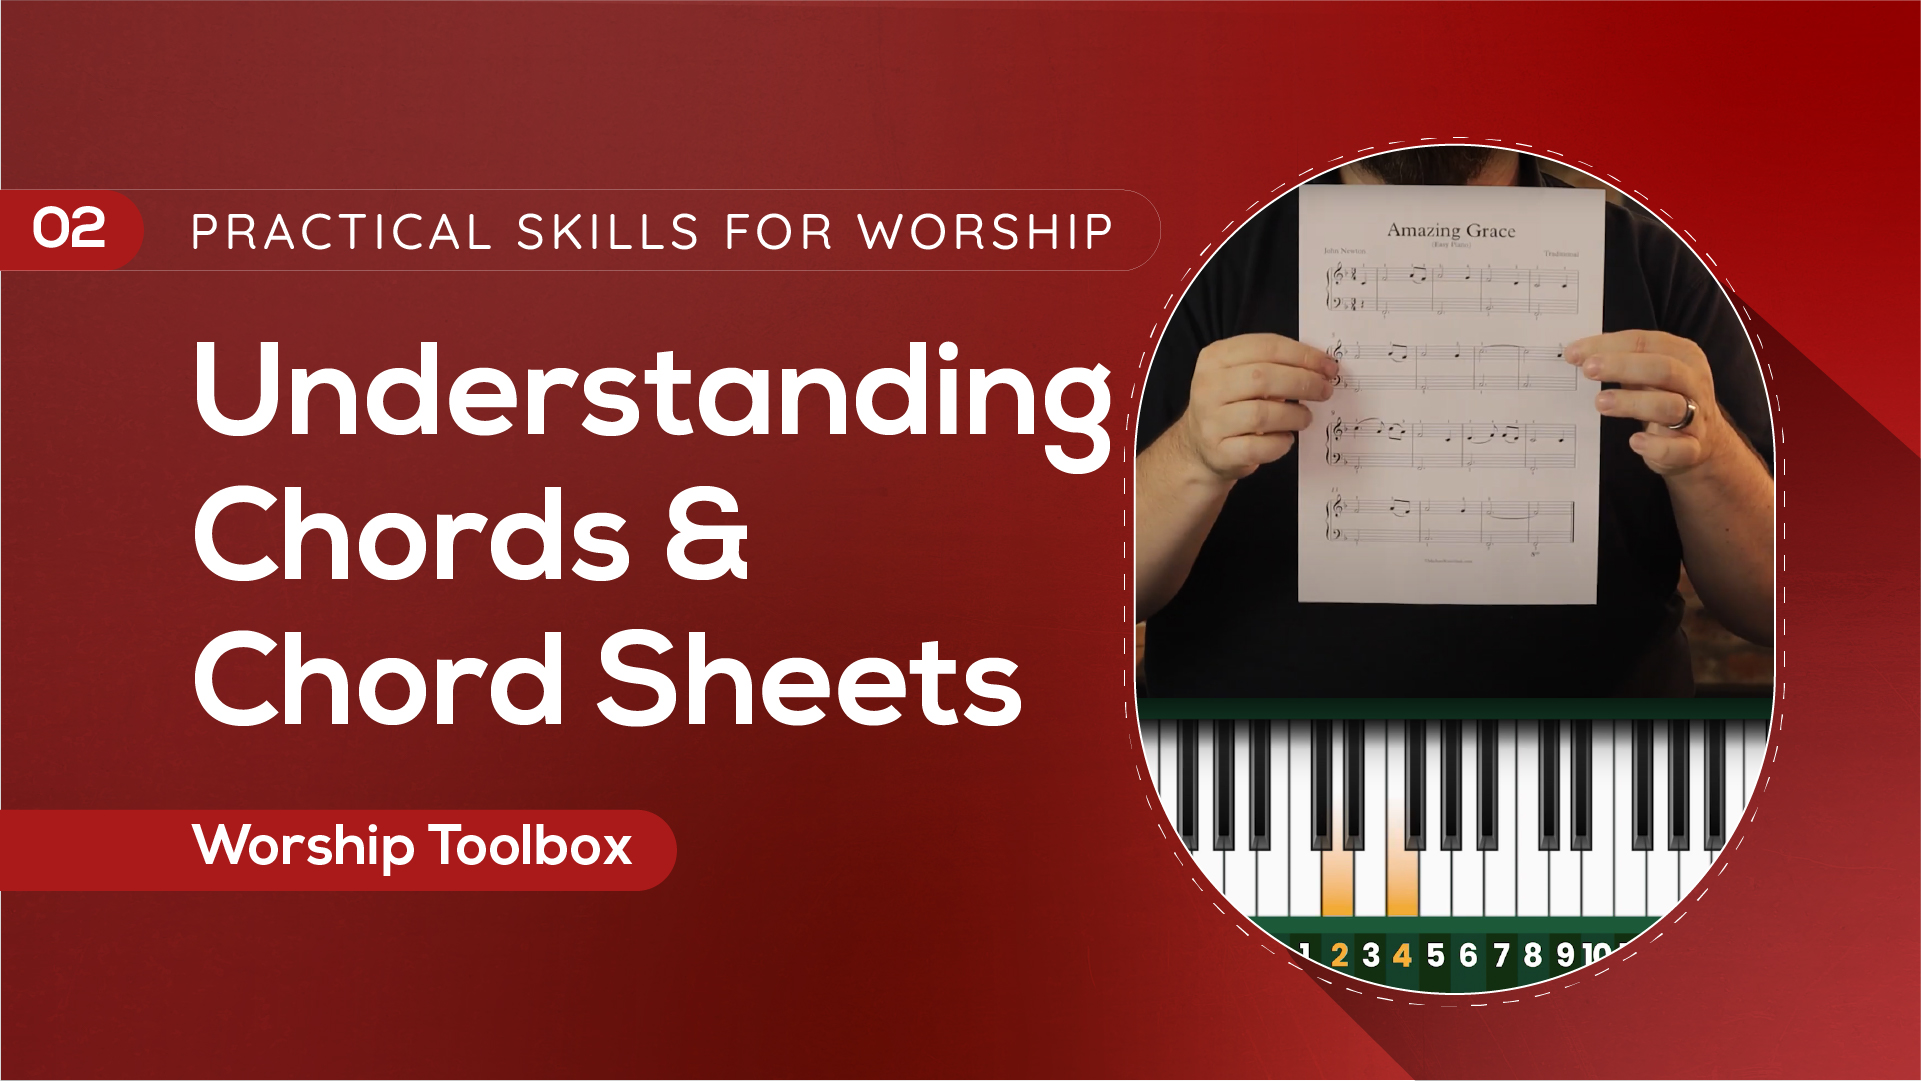 02 Understanding Chords_Practical Skills_1920x1080